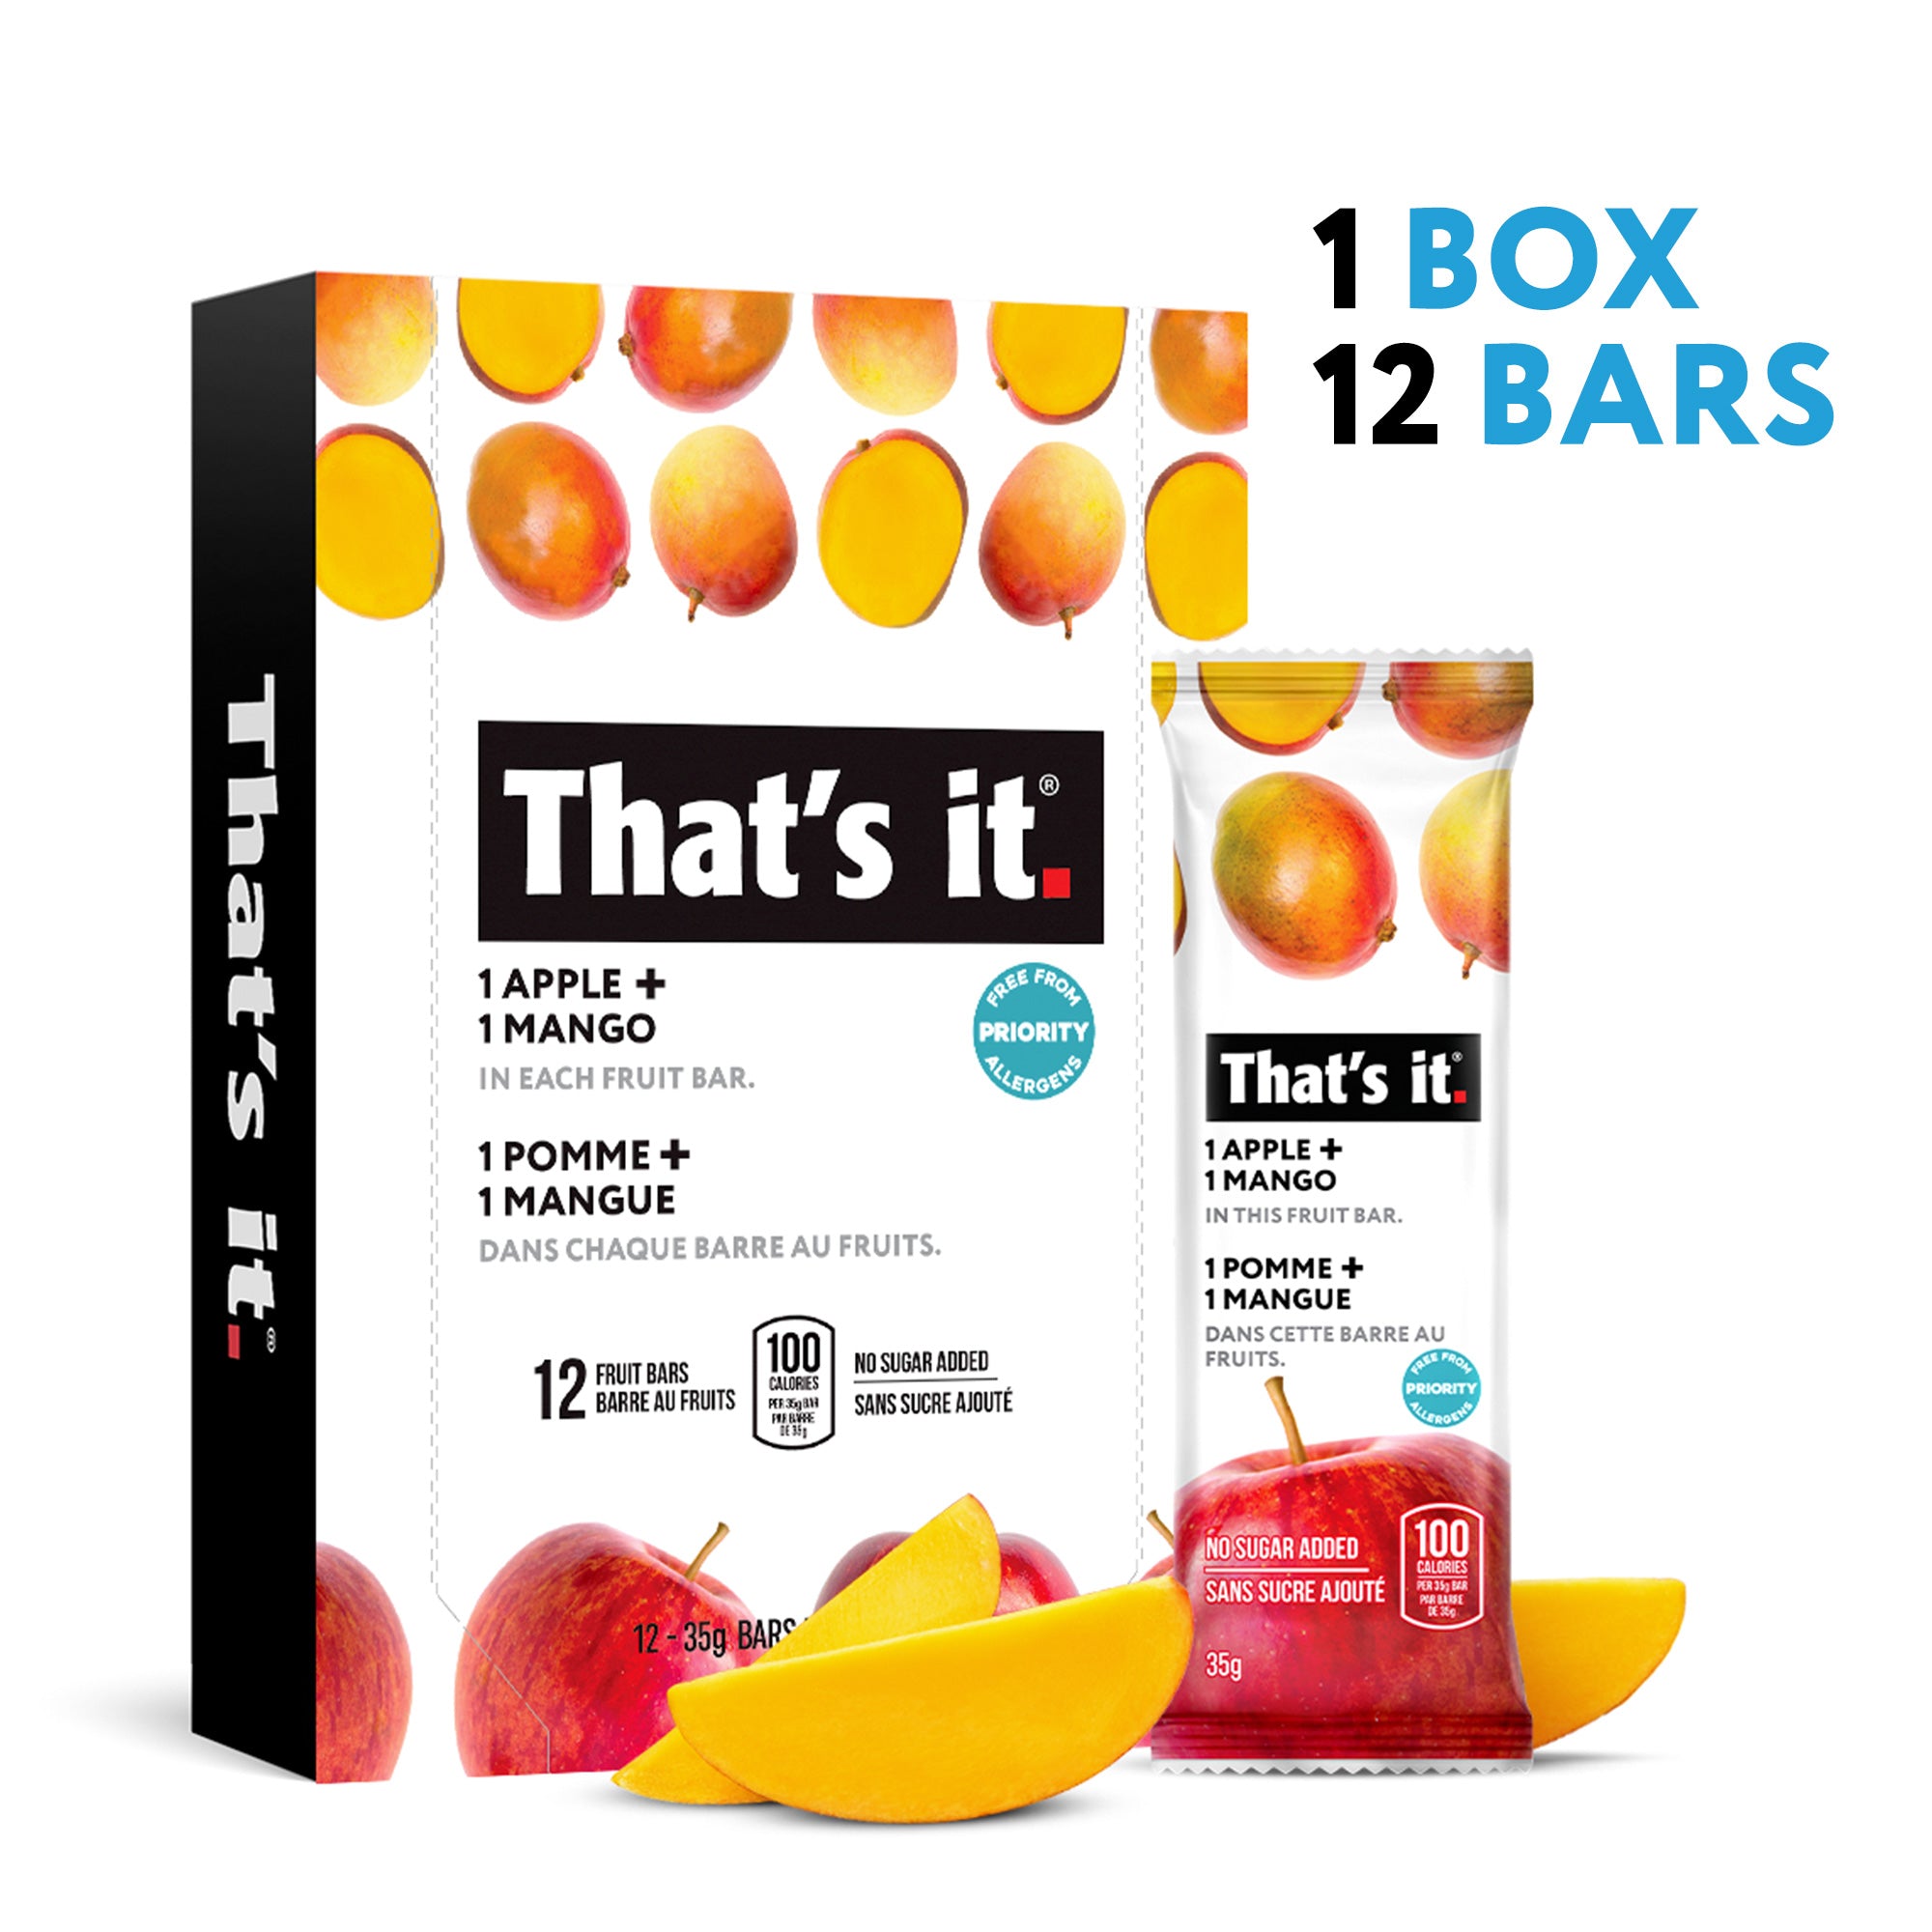 1 box 12 bars. 12 ct box of Apple + Mango Fruit Bars